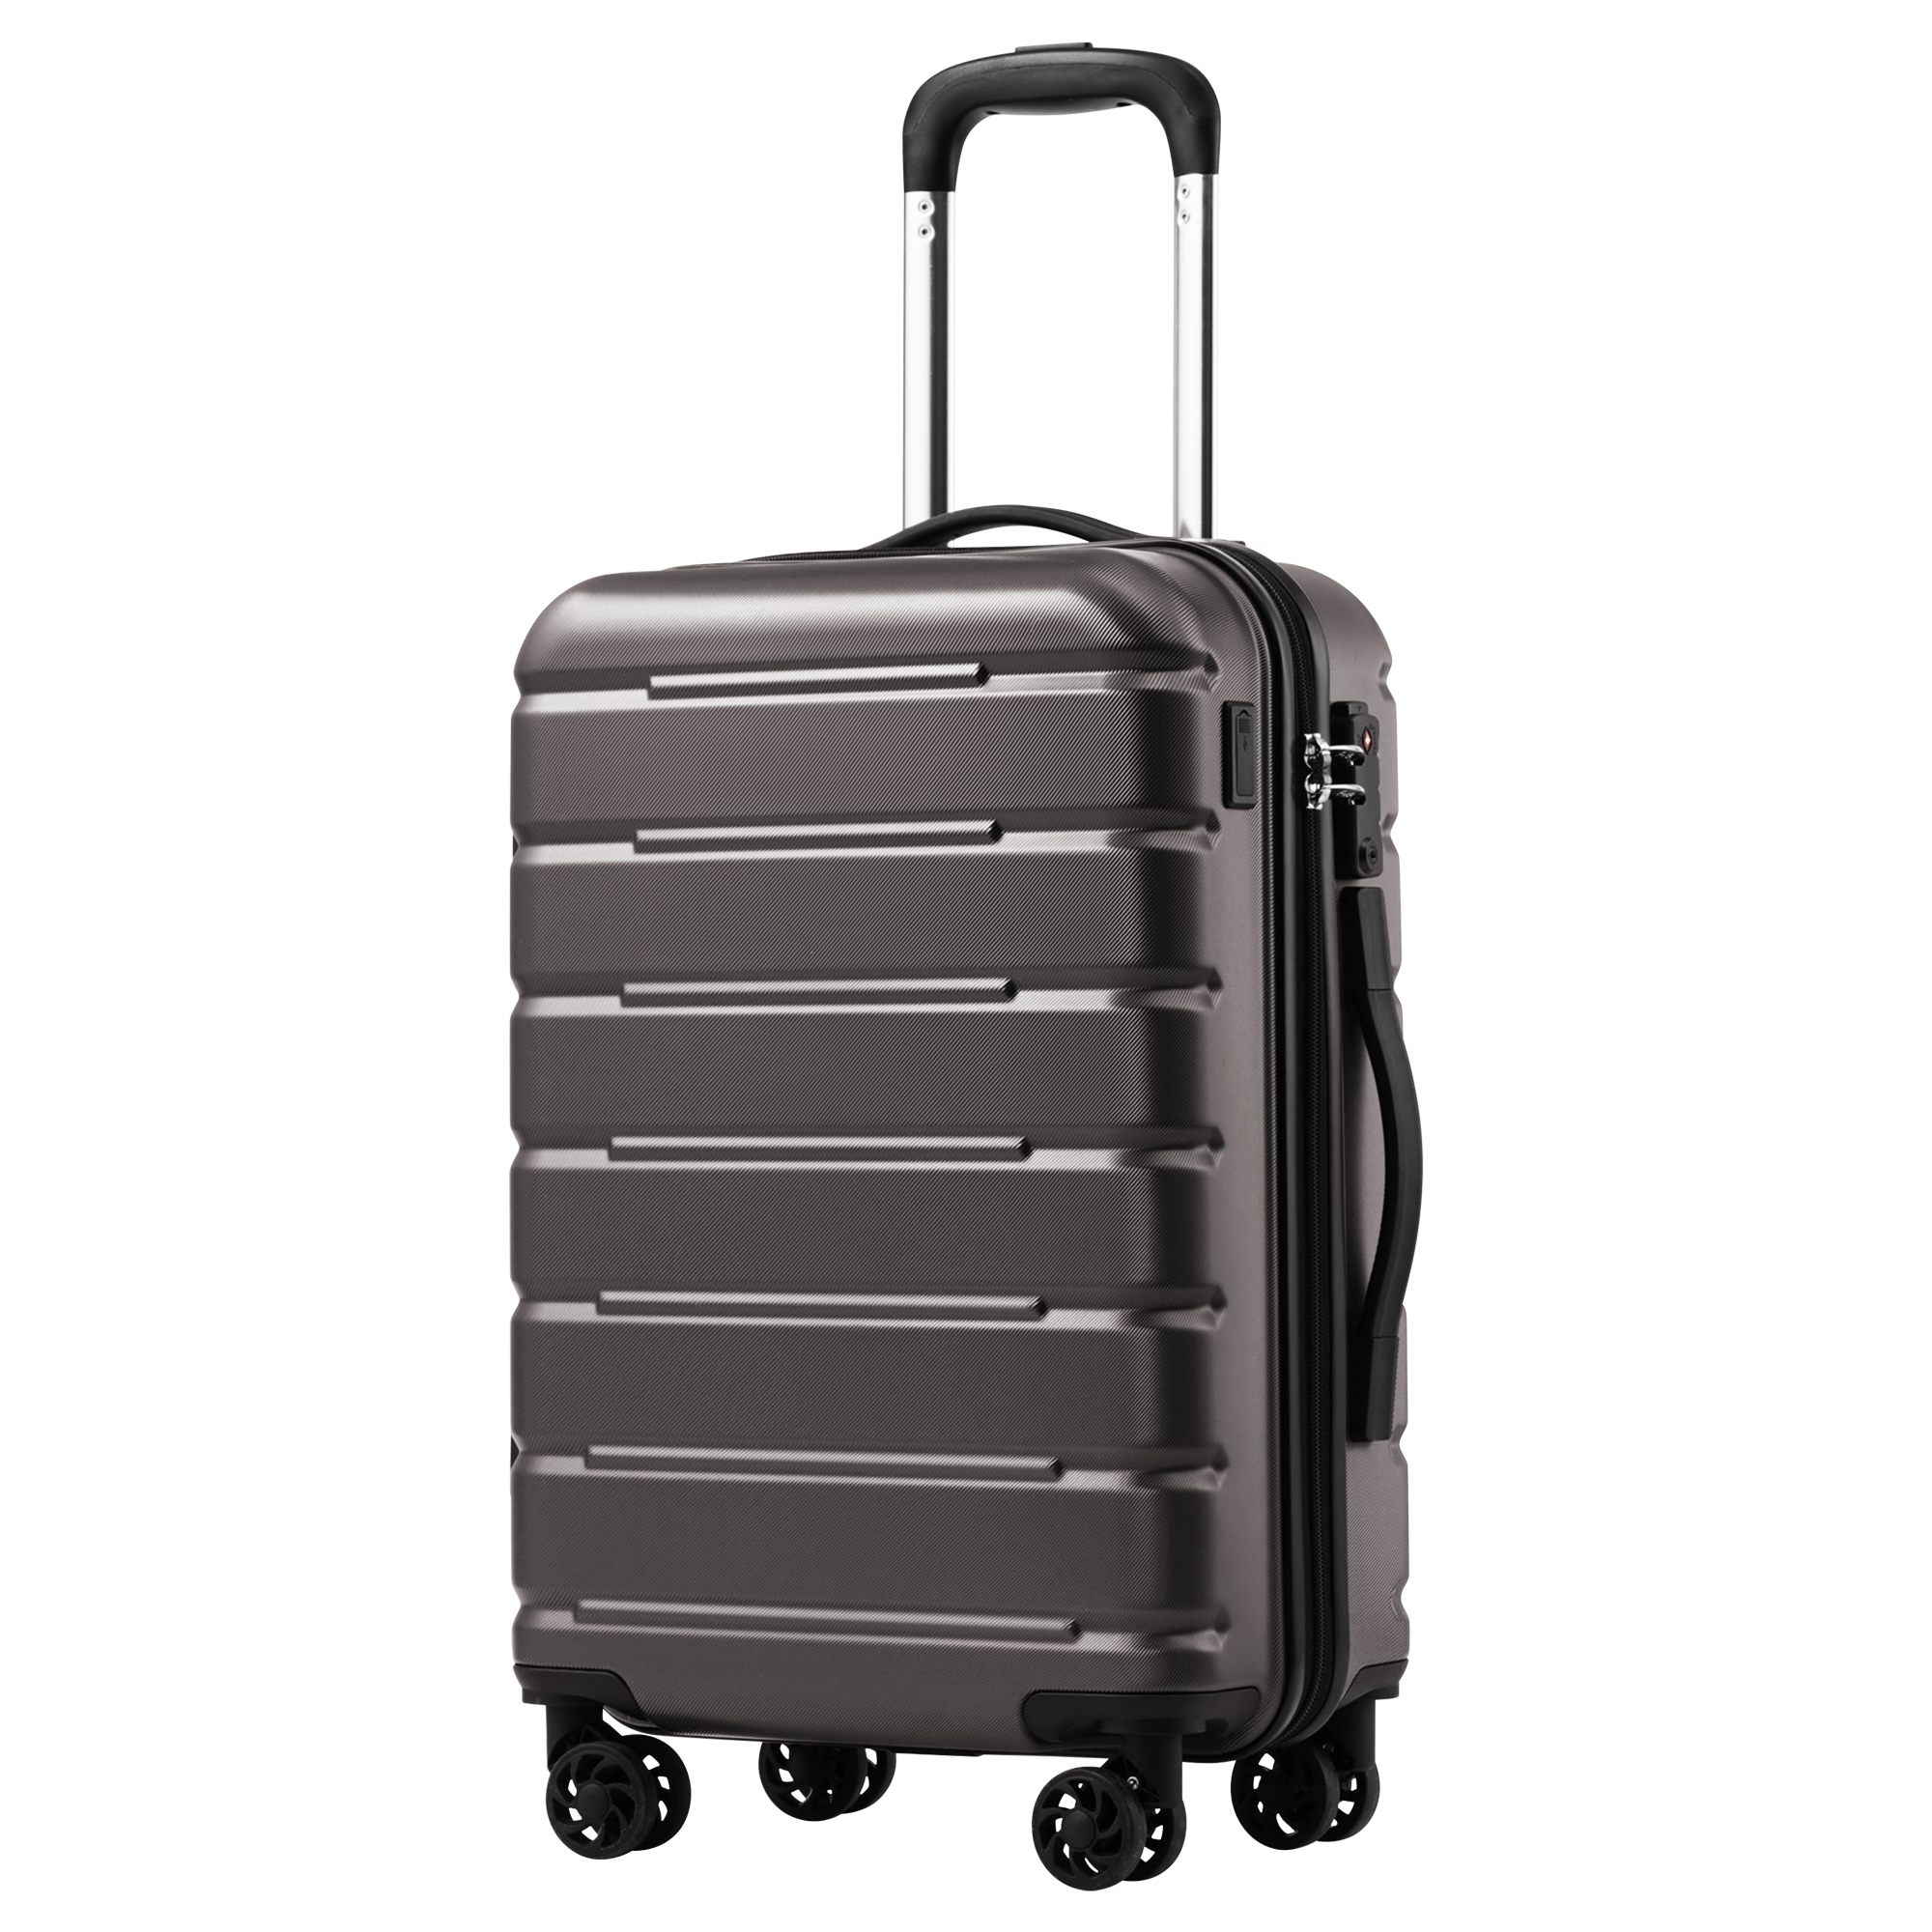 Coolife Luggage Suitcase Carry-on Spinner TSA Lock USB Port Expandable (only 28'') Lightweight Hardside Luggage